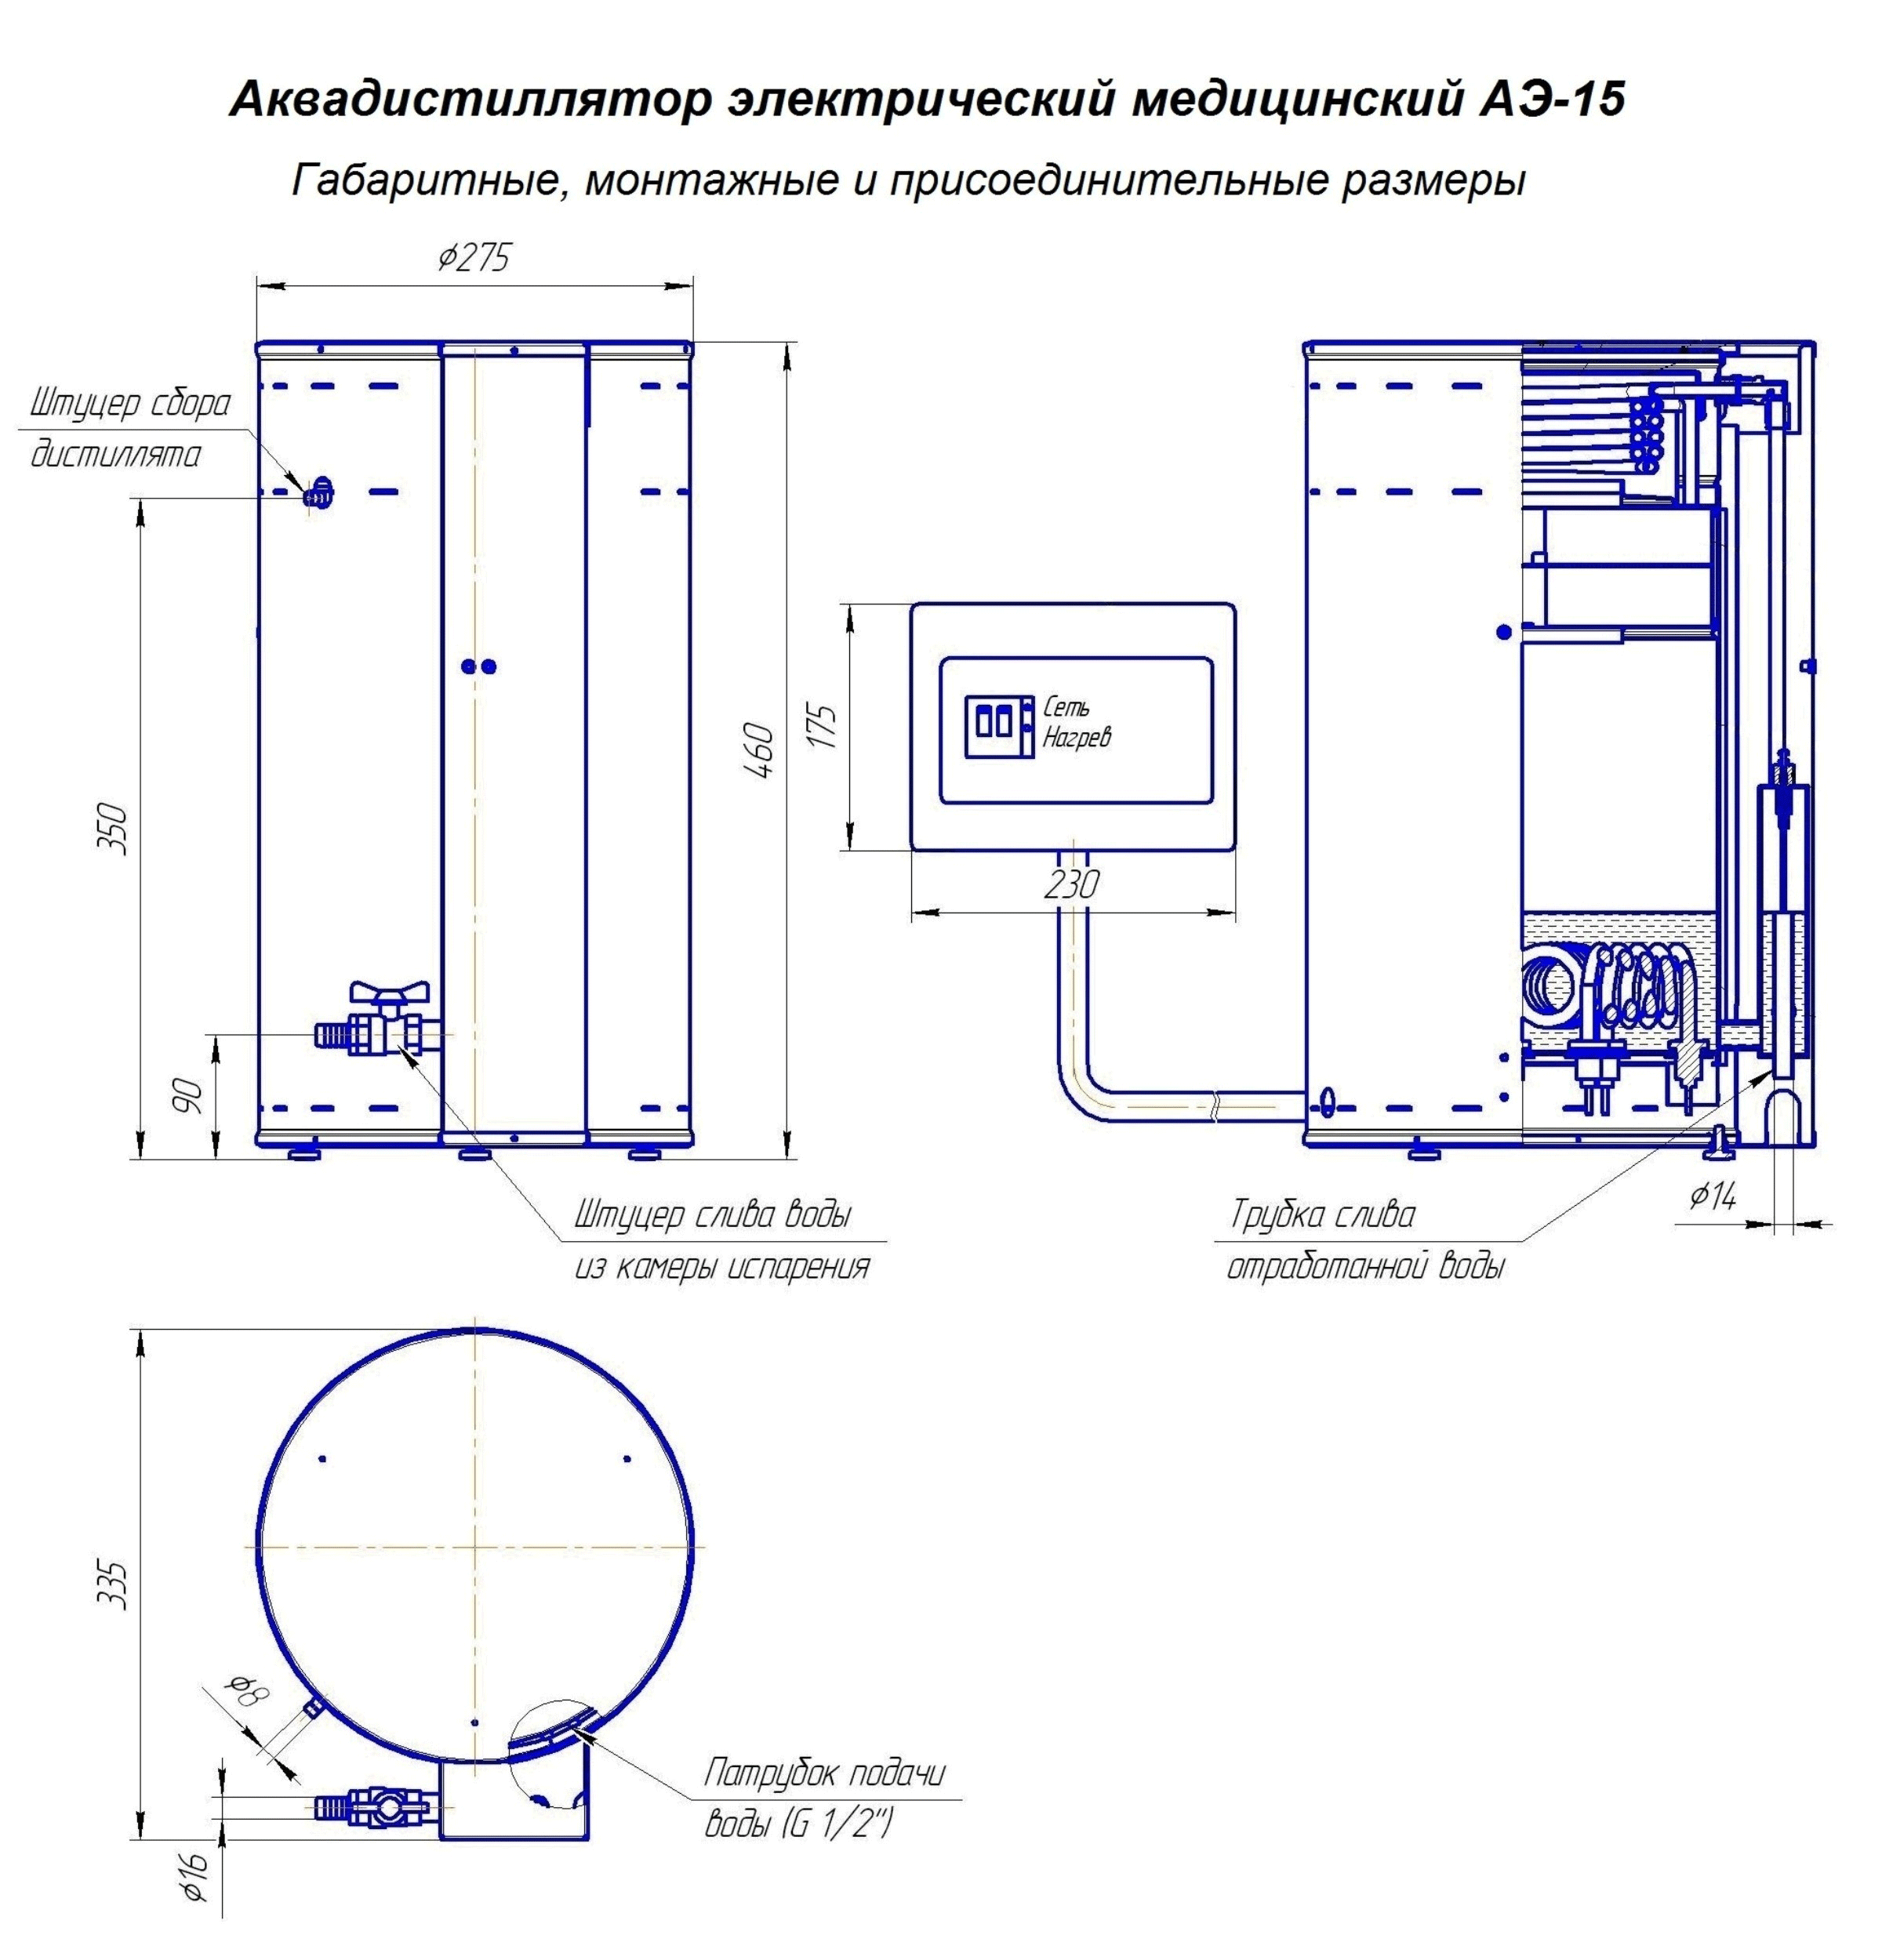 Устройство и особенности аквадистиллятора ДЭ-25